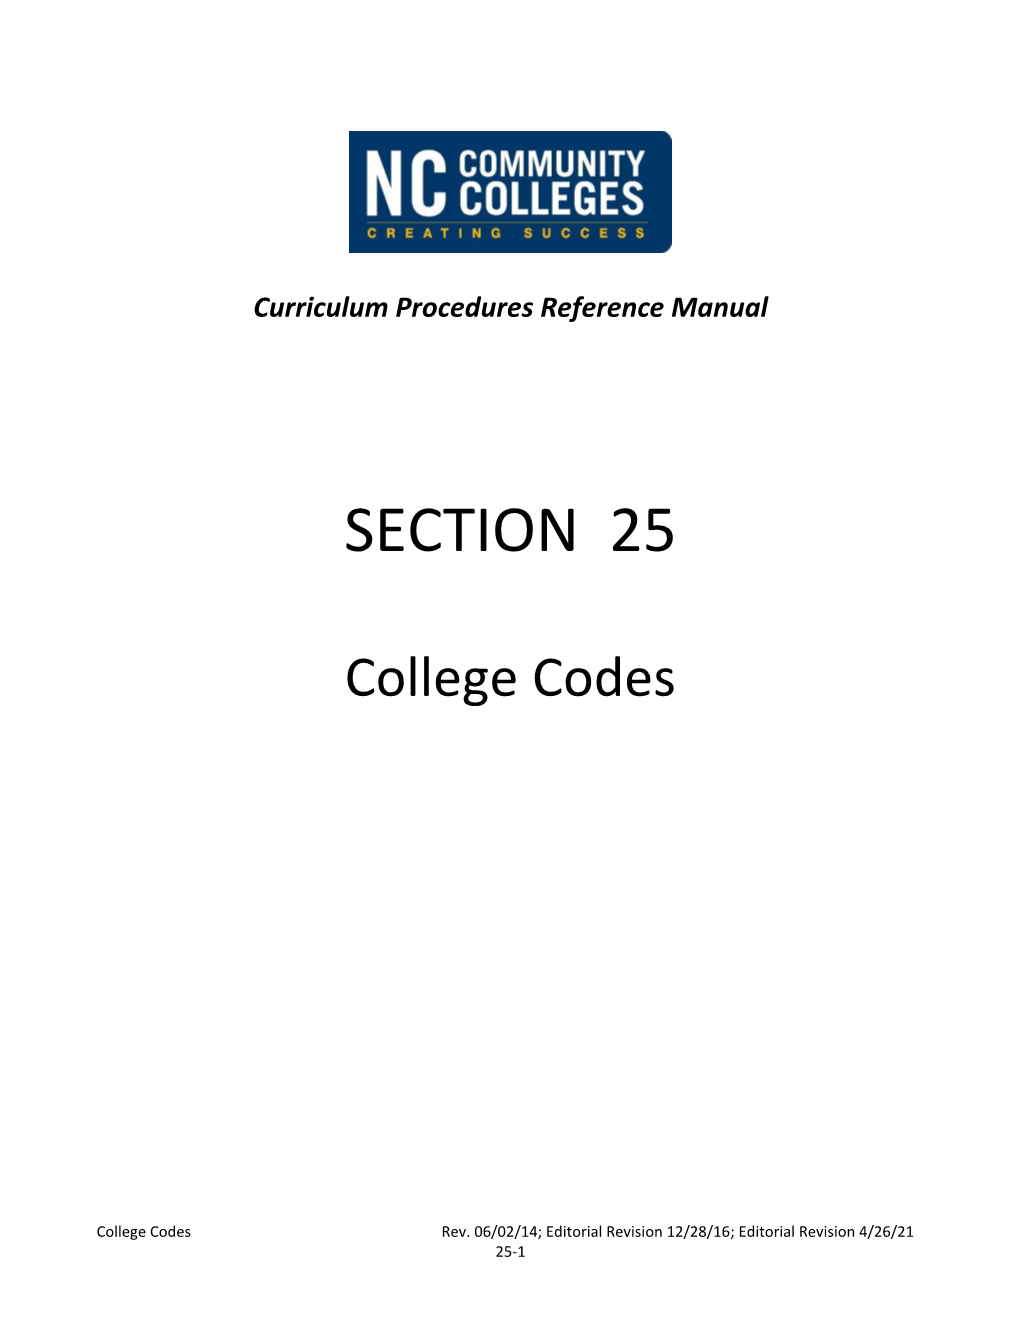 North Carolina Community College Codes